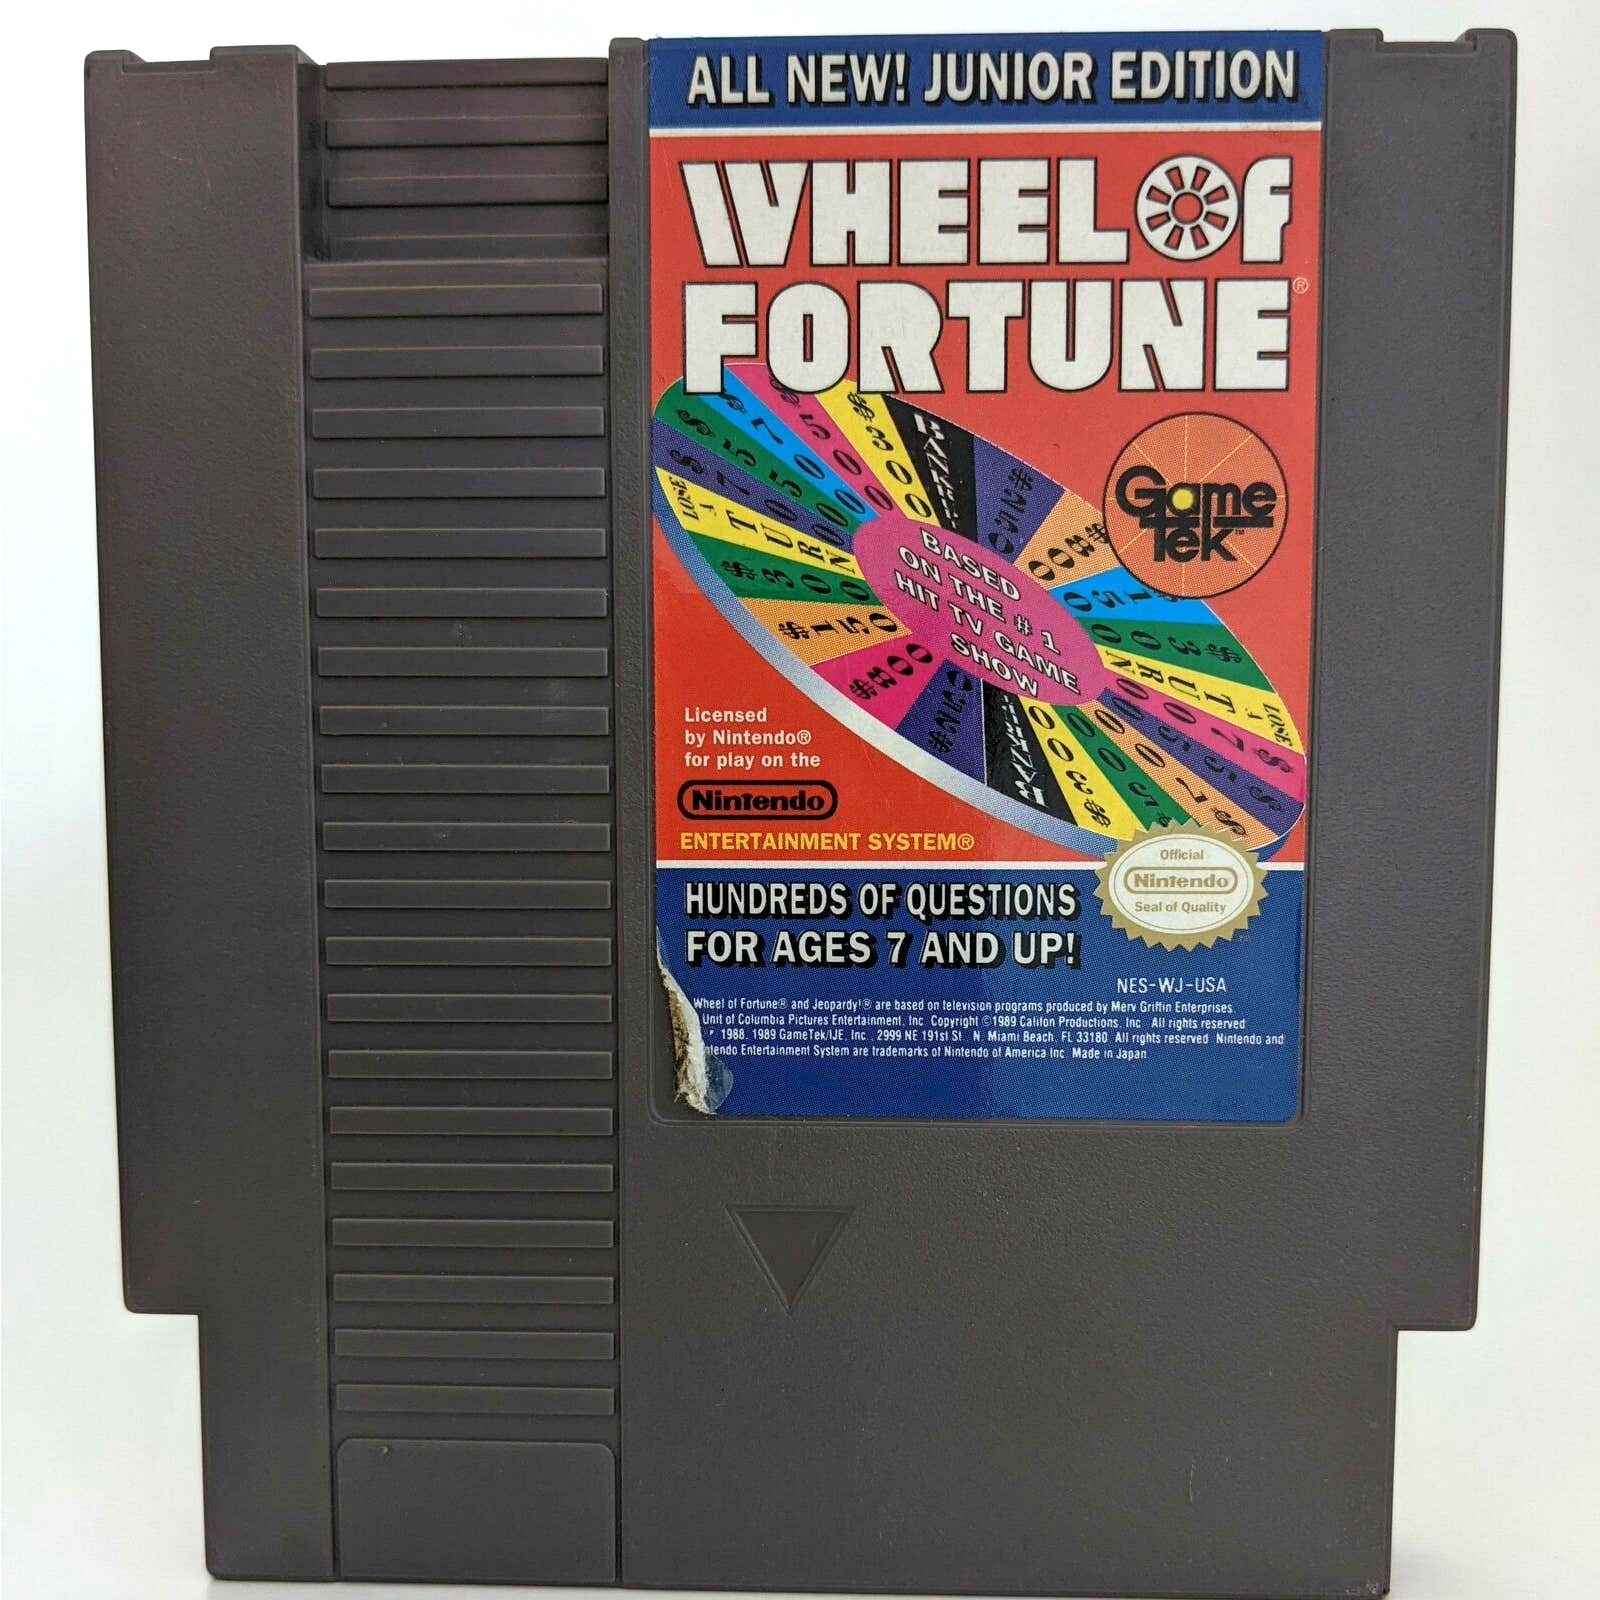 Primary image for Wheel of Fortune Junior Edition (NES) - Loose (GameTek, 1989)